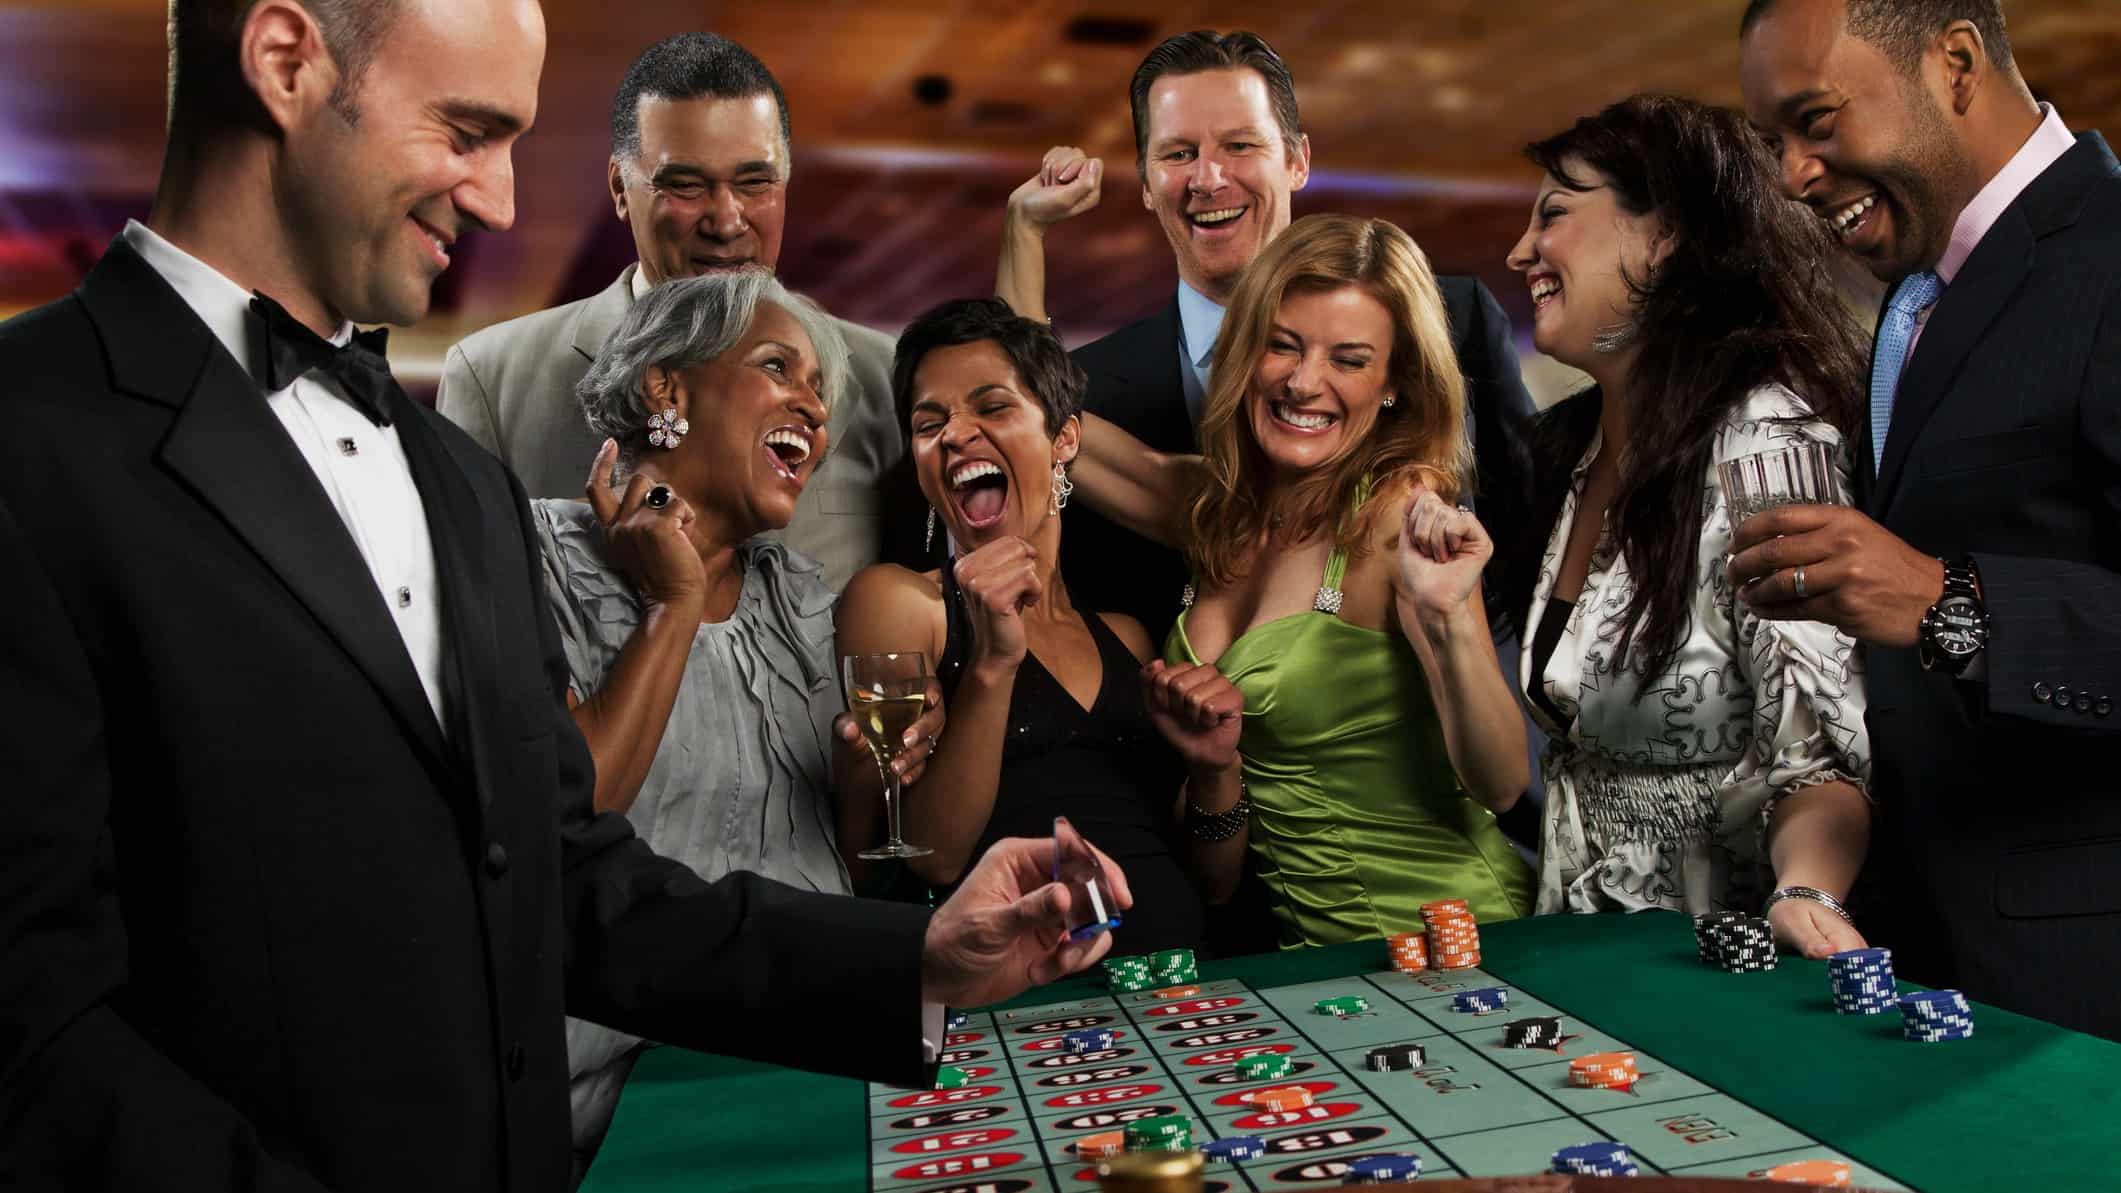 group of people cheer at blackjack table at casino.